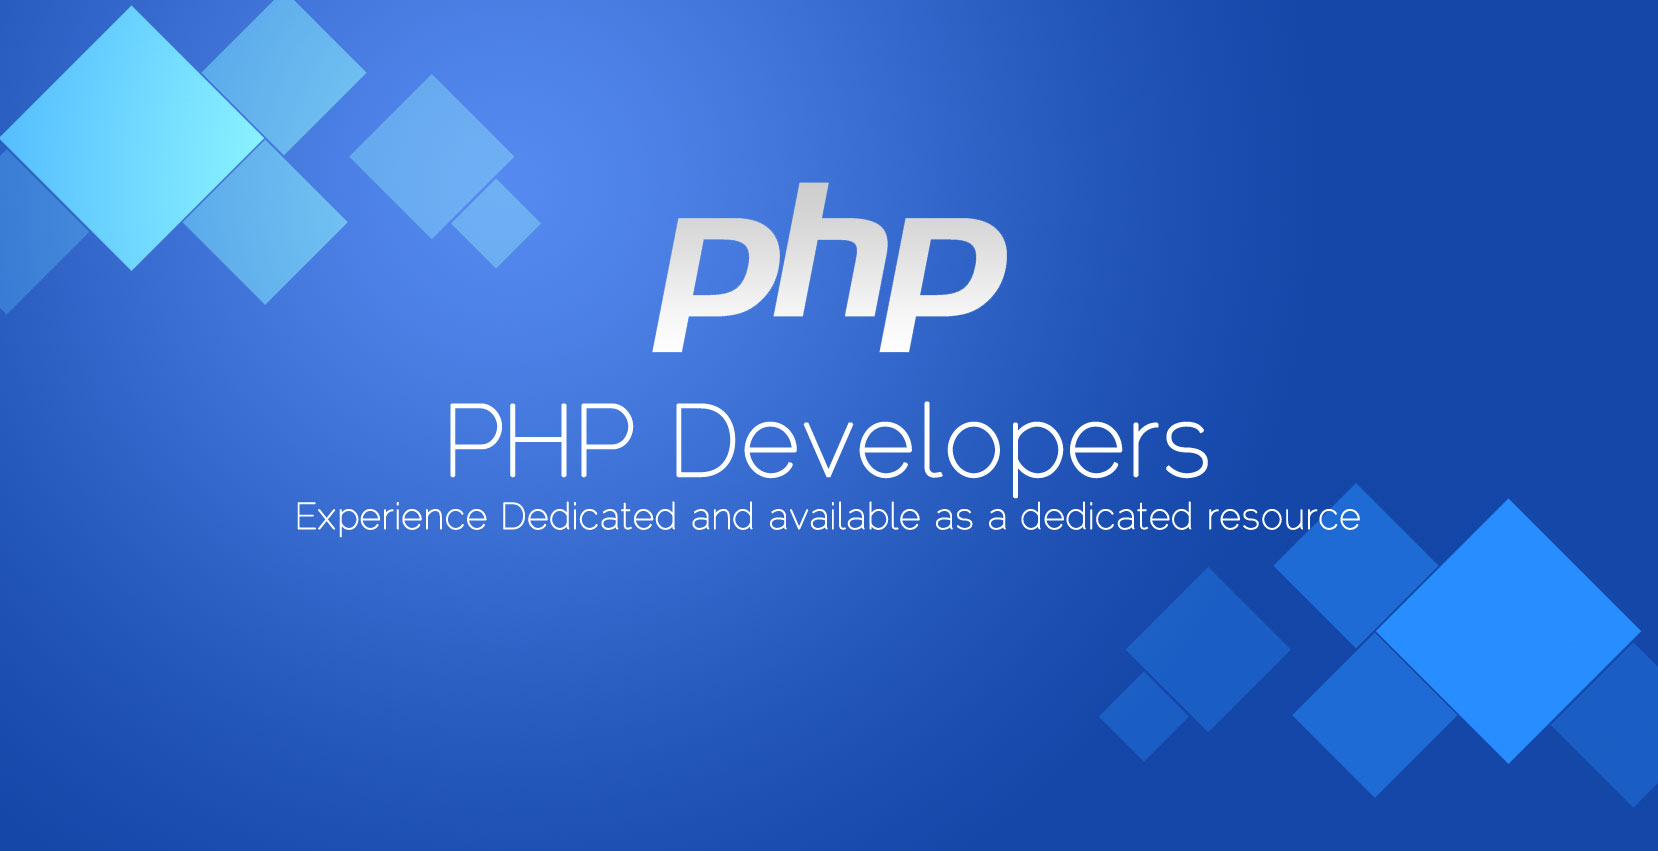 Top PHP Development Companies - DevX